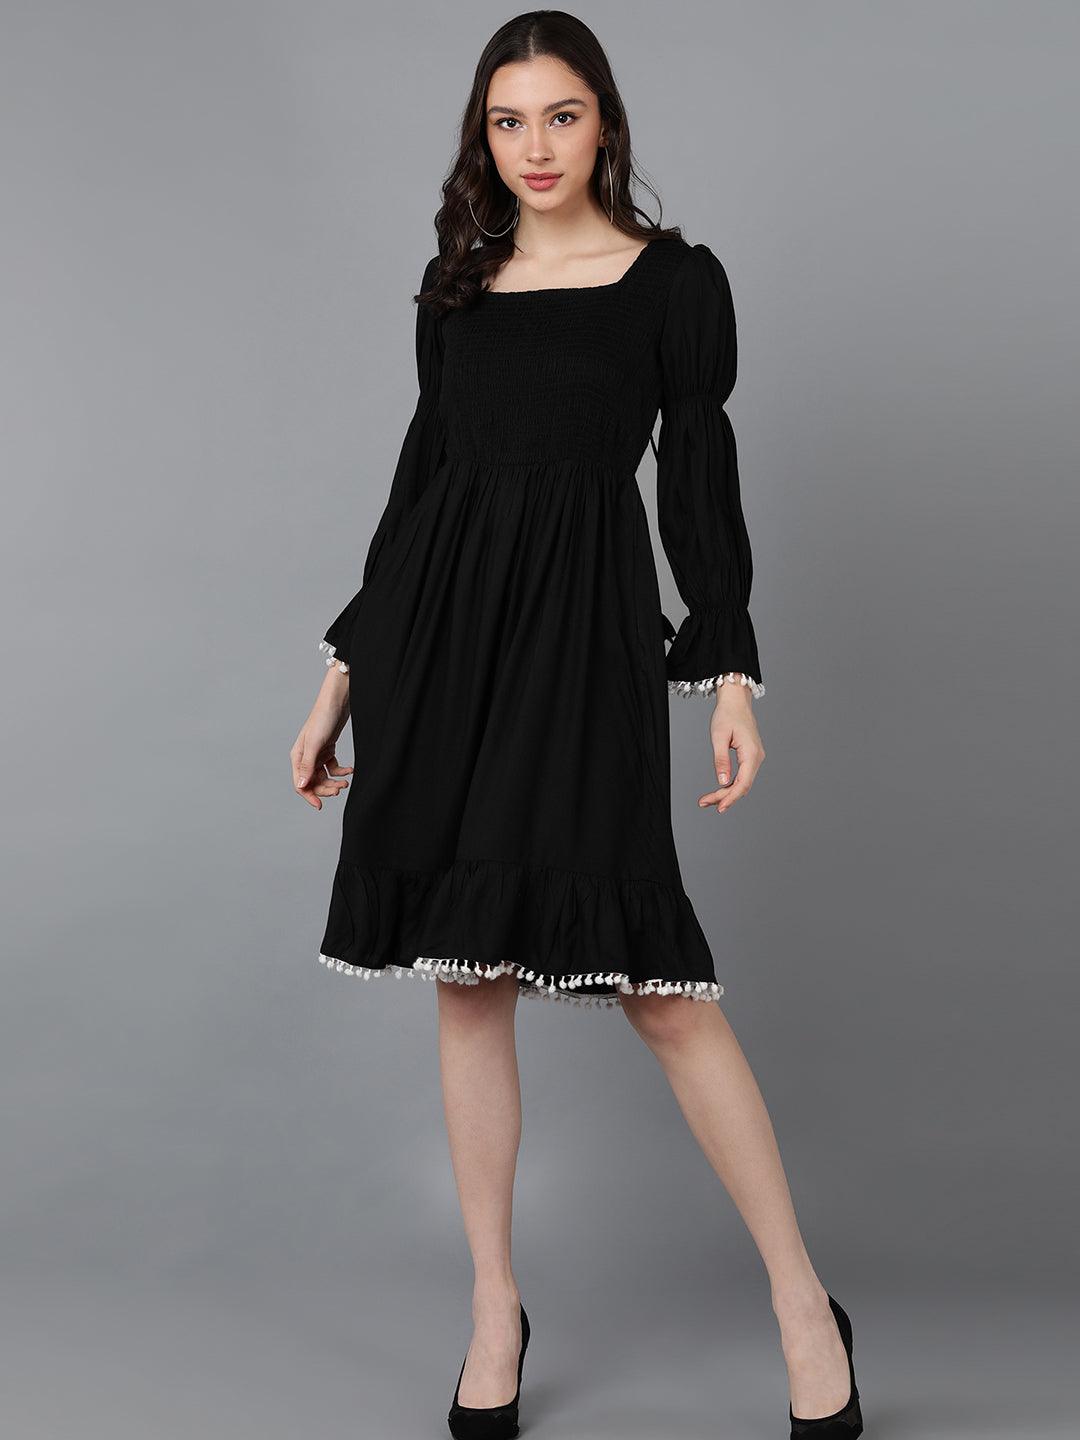 Solid Black Smocked Dress - Znxclothing